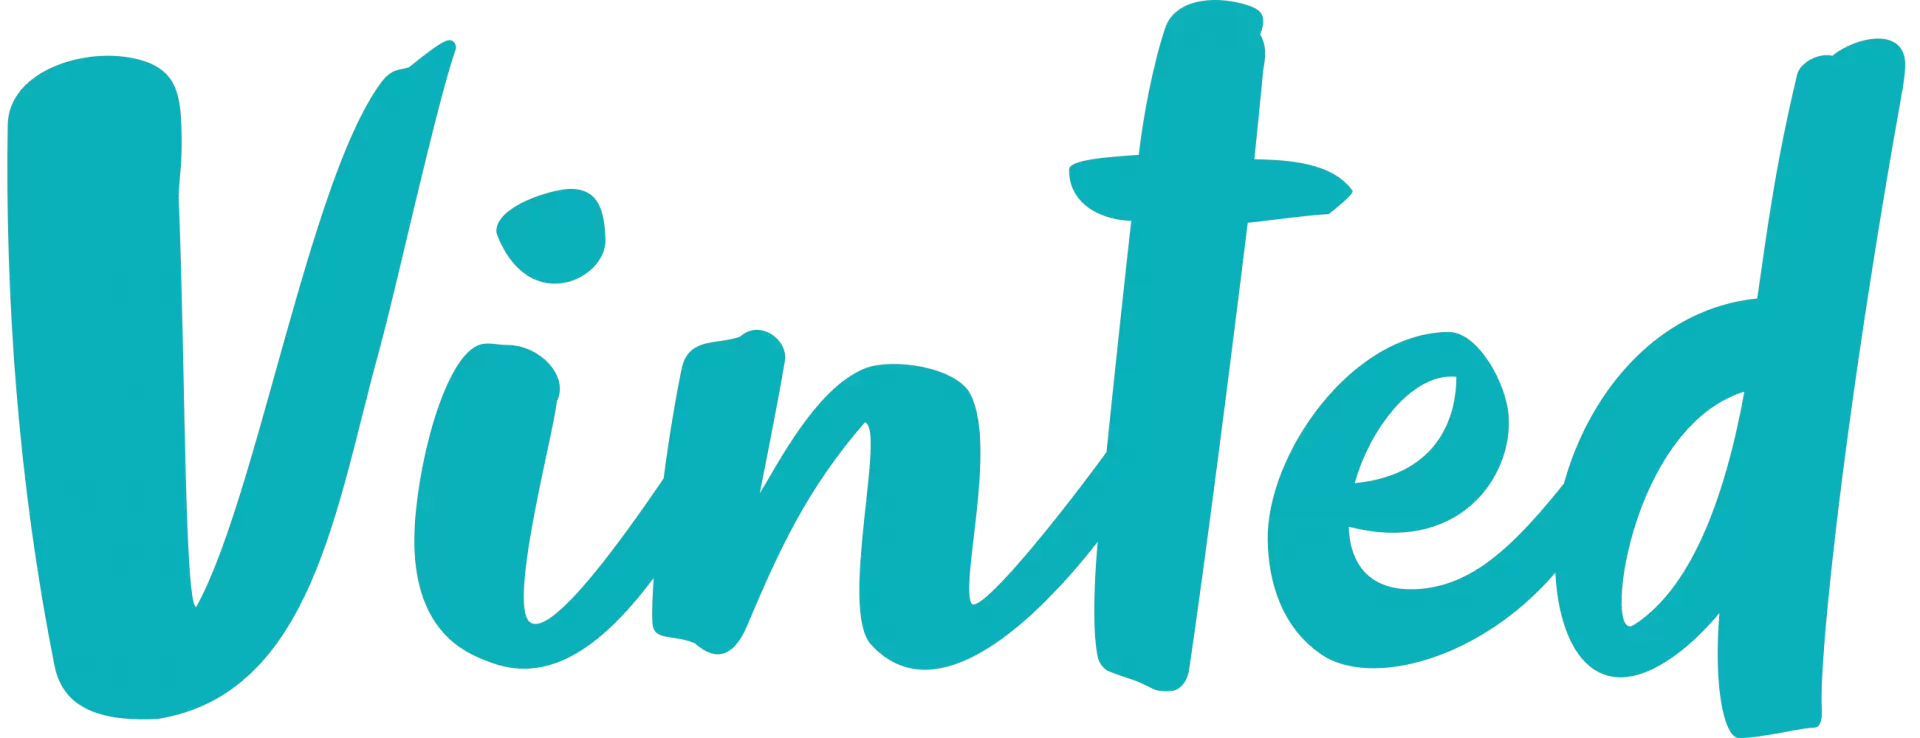 Logo Vinted